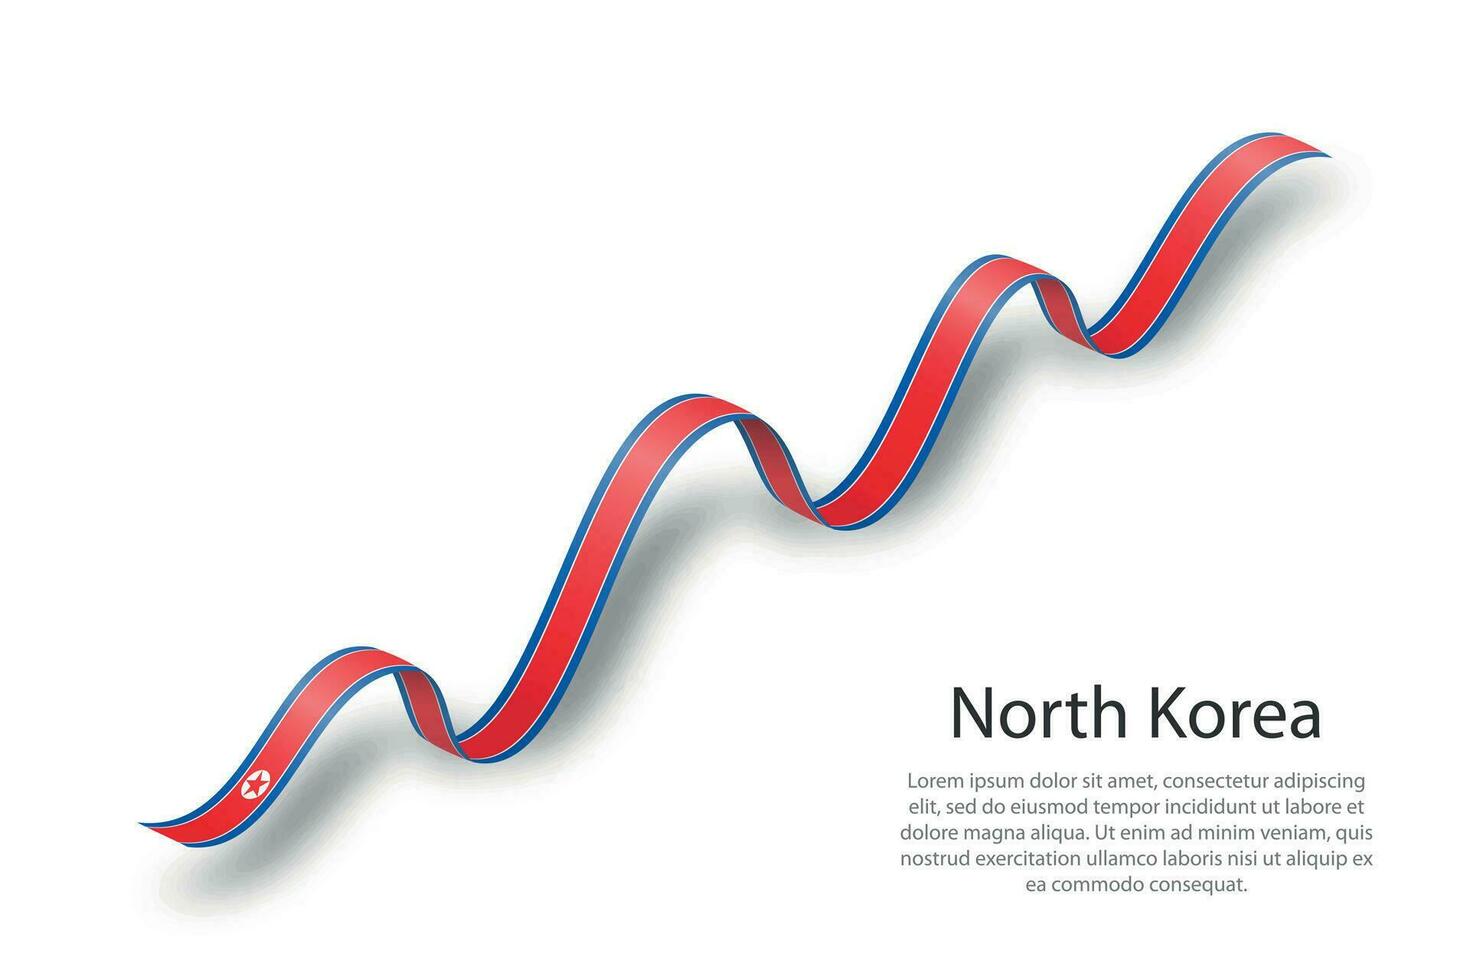 acenando a fita ou banner com bandeira da coreia do norte vetor